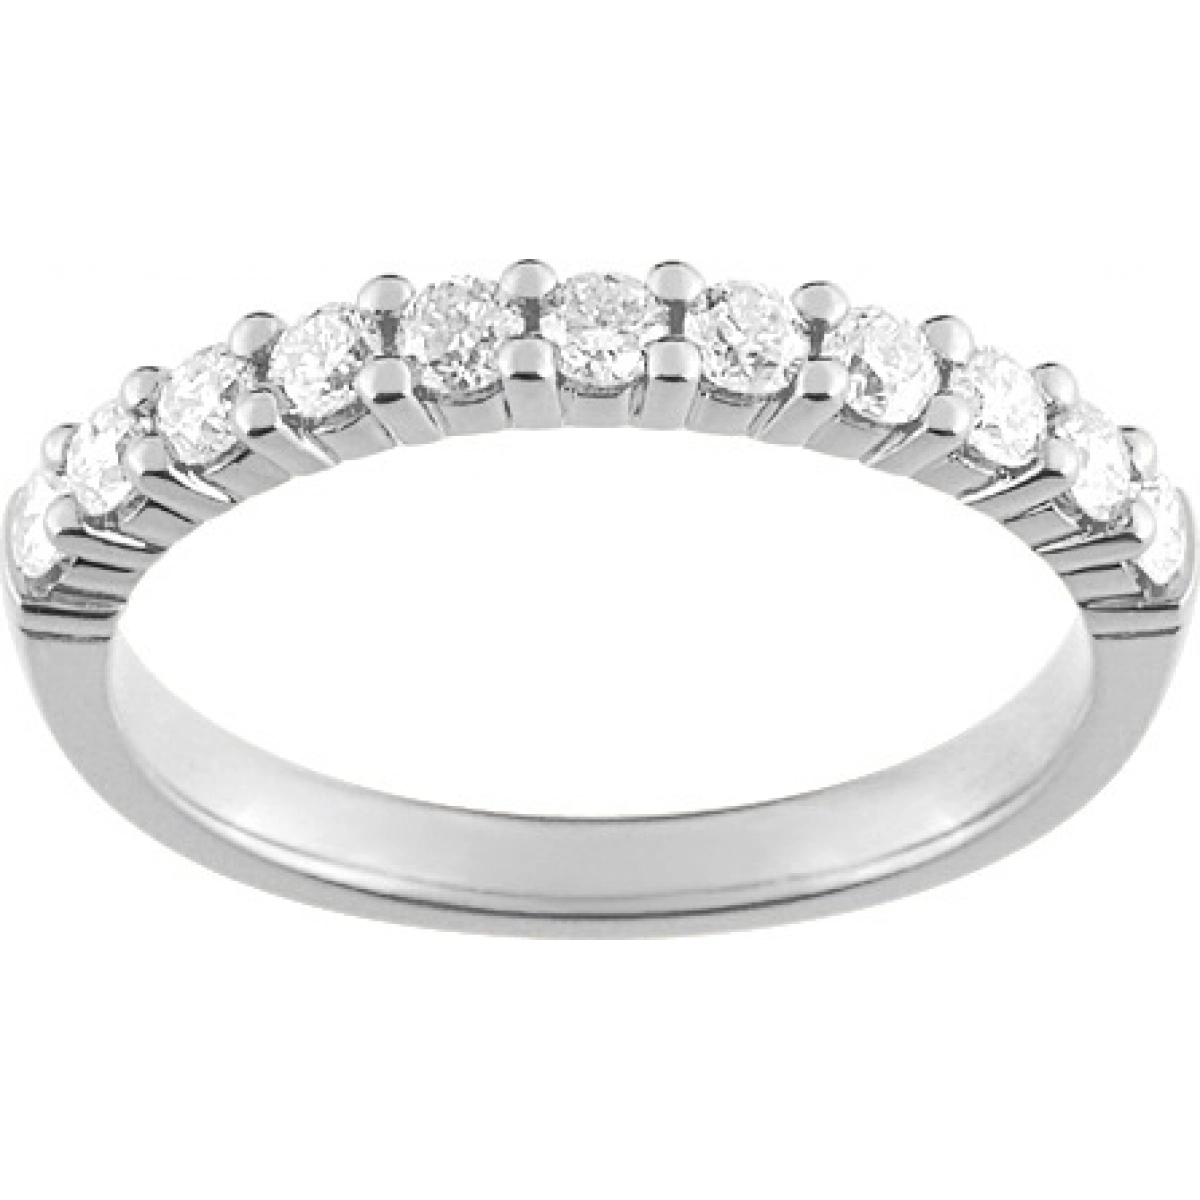 Wedding ring w. 11 diam 0.50ct 18K WG - Size: 56  Lua Blanca  3L008GB2.16